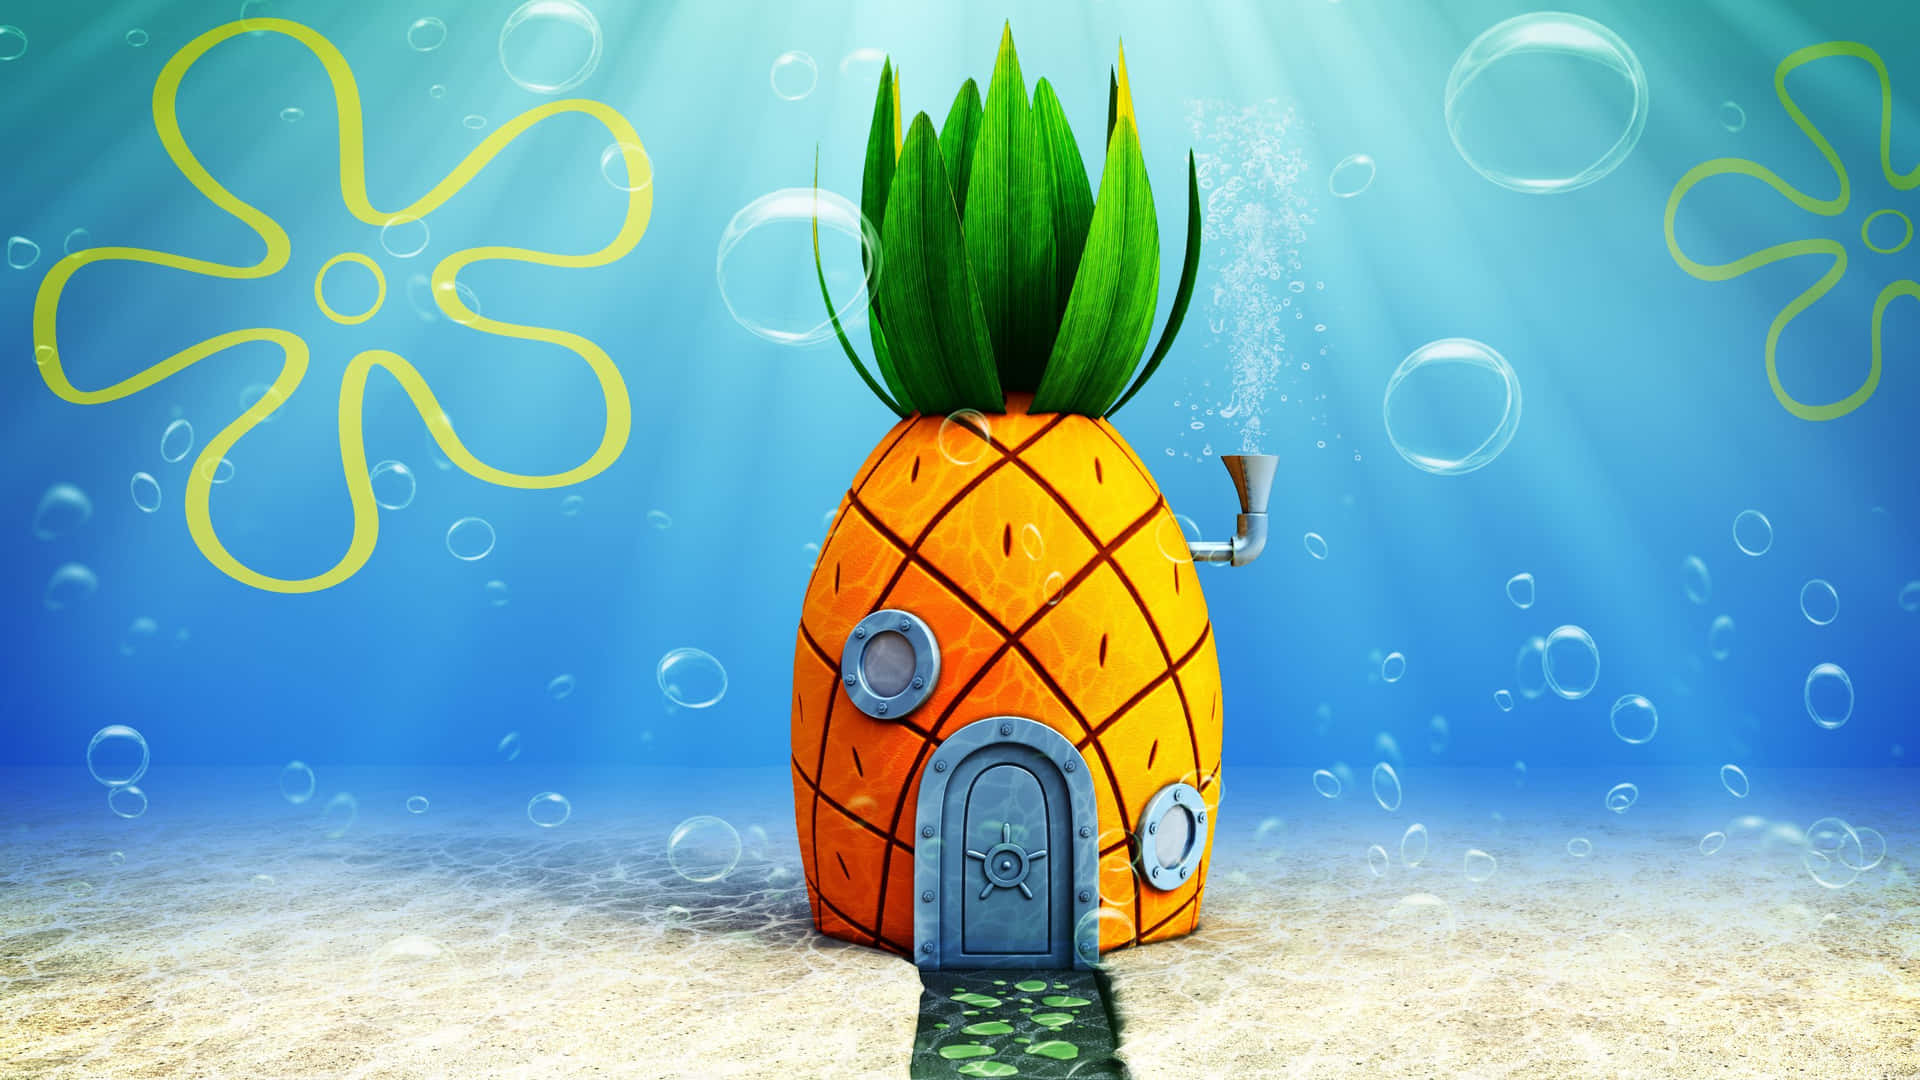 Spongebob dives into another adventure!